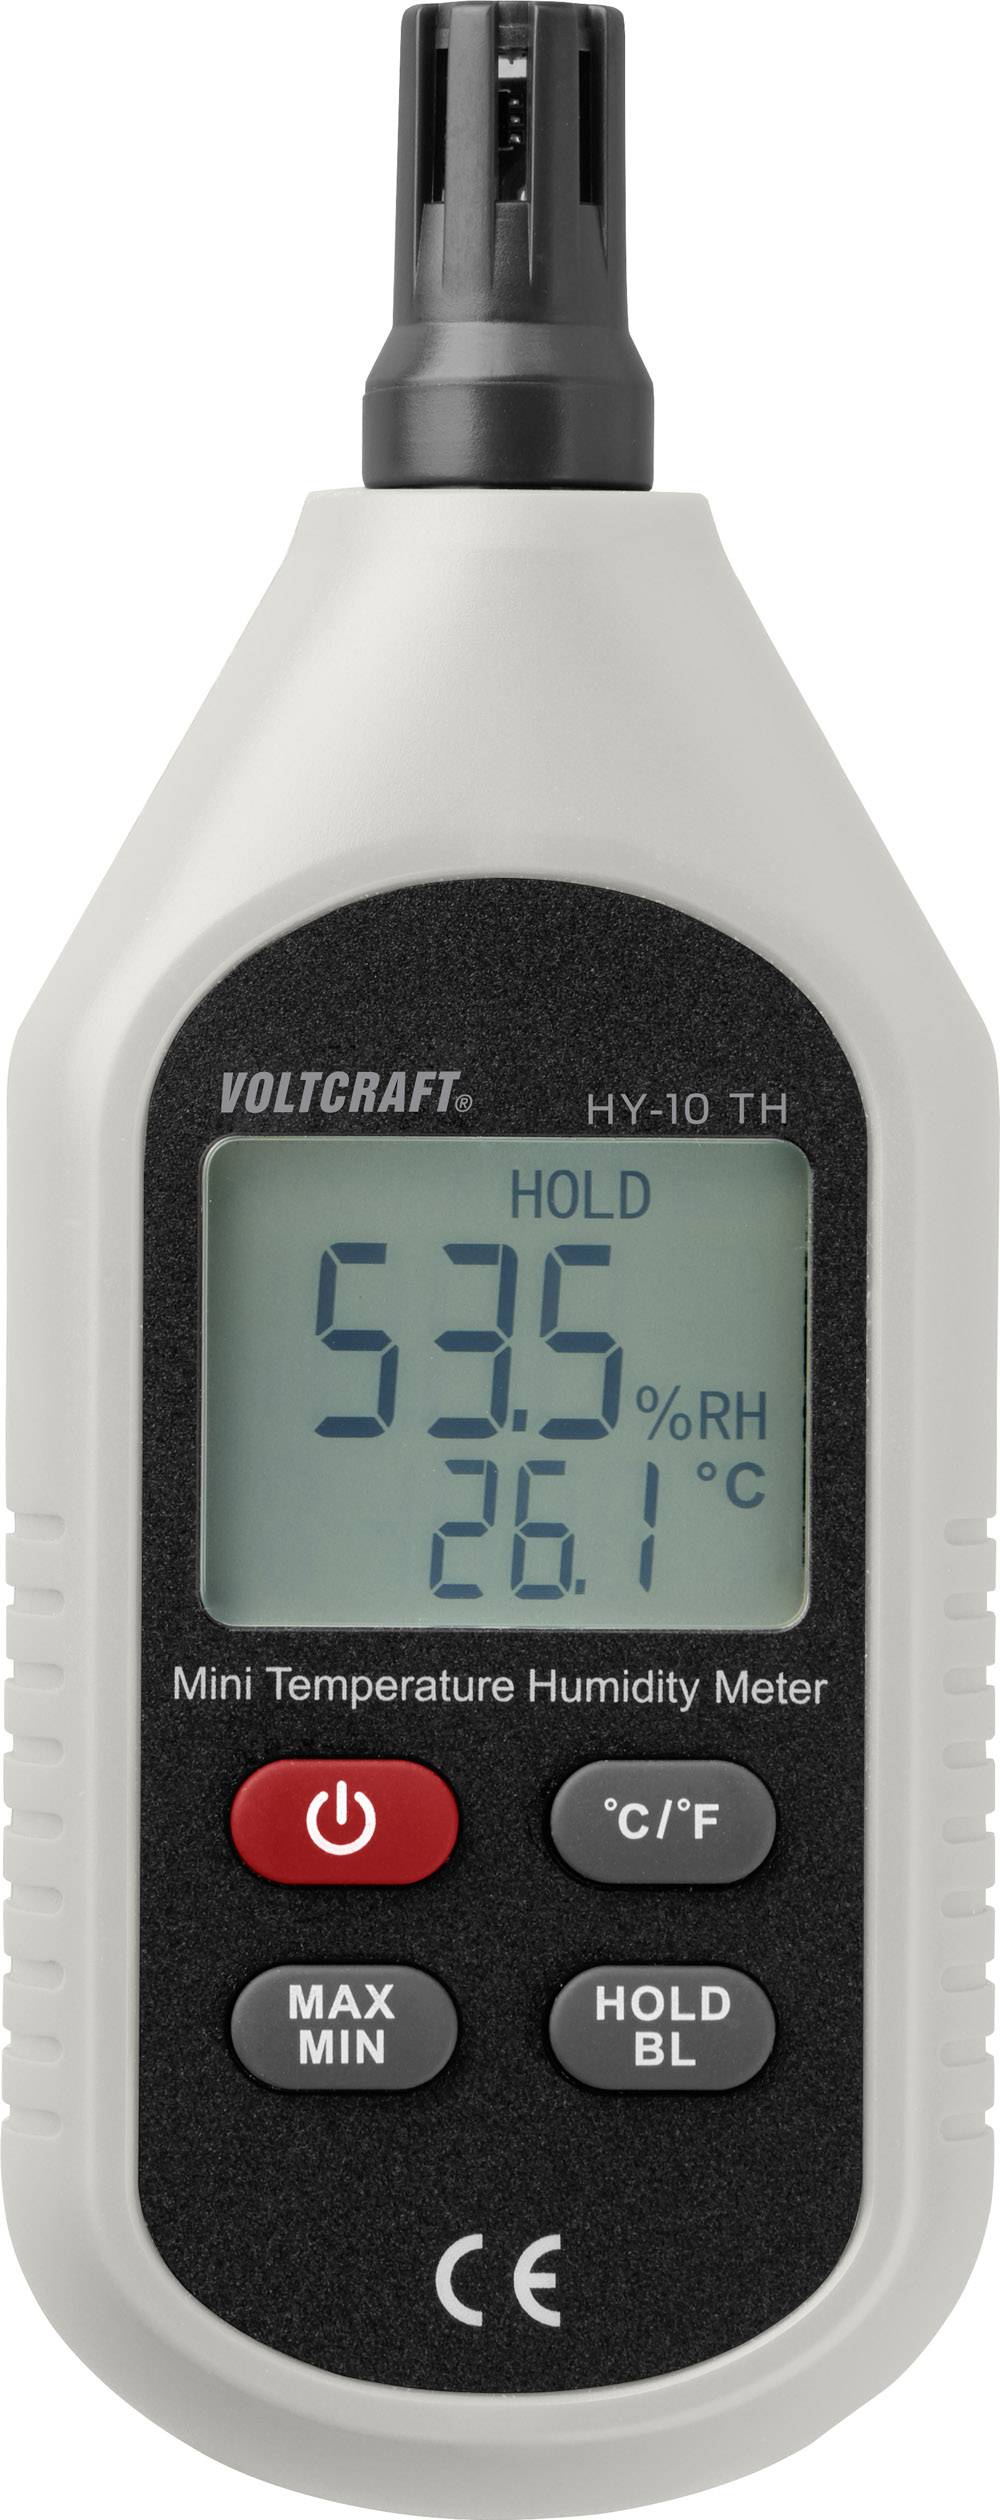 VOLTCRAFT HY-10 TH Luftfeuchtemessgerät (Hygrometer)